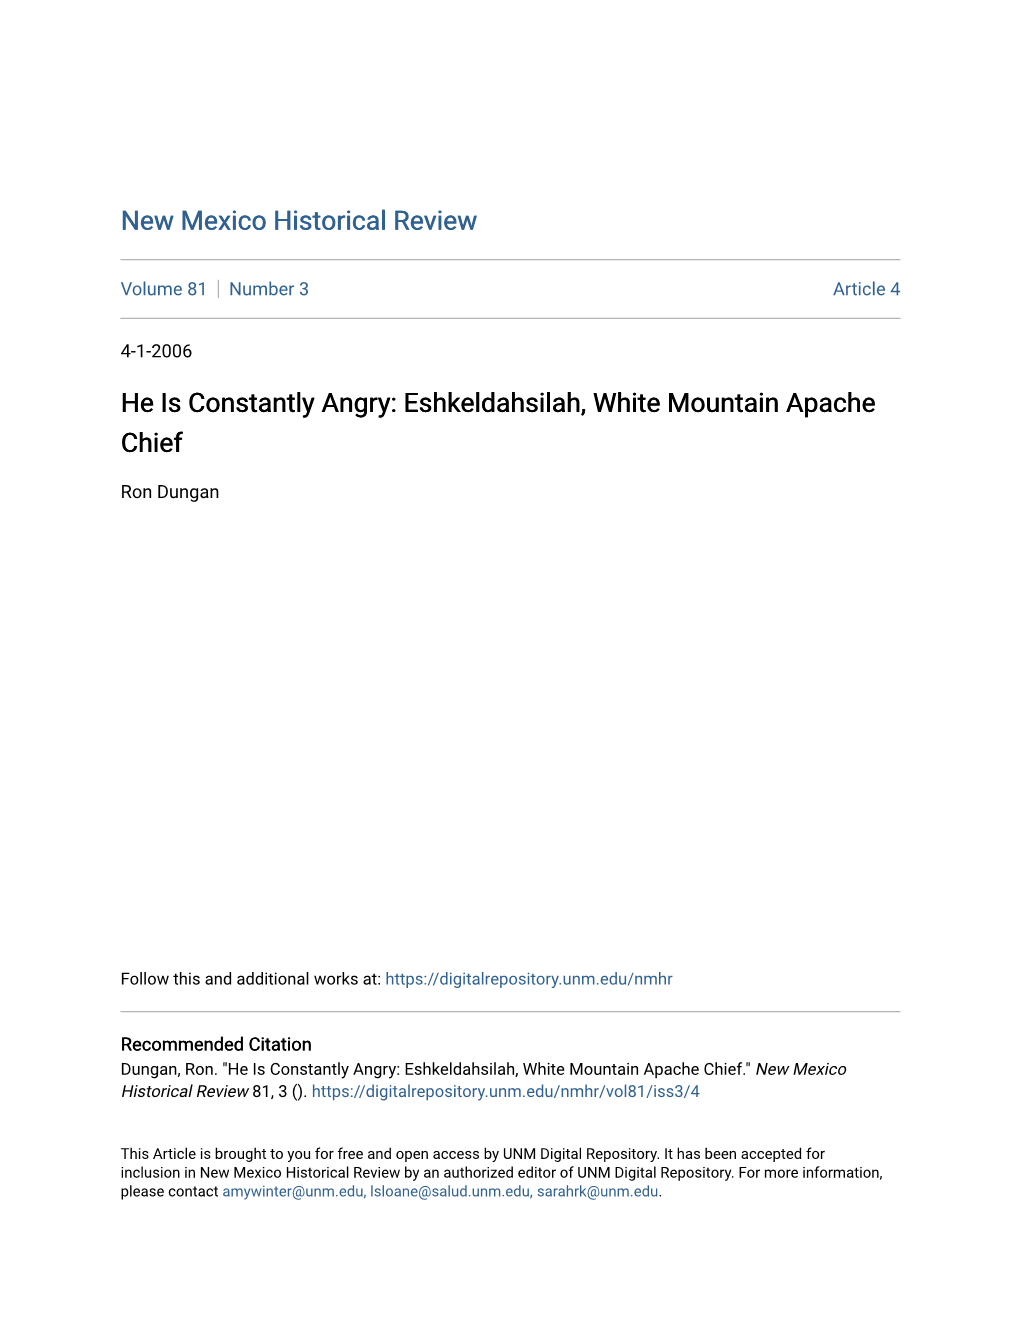 He Is Constantly Angry: Eshkeldahsilah, White Mountain Apache Chief